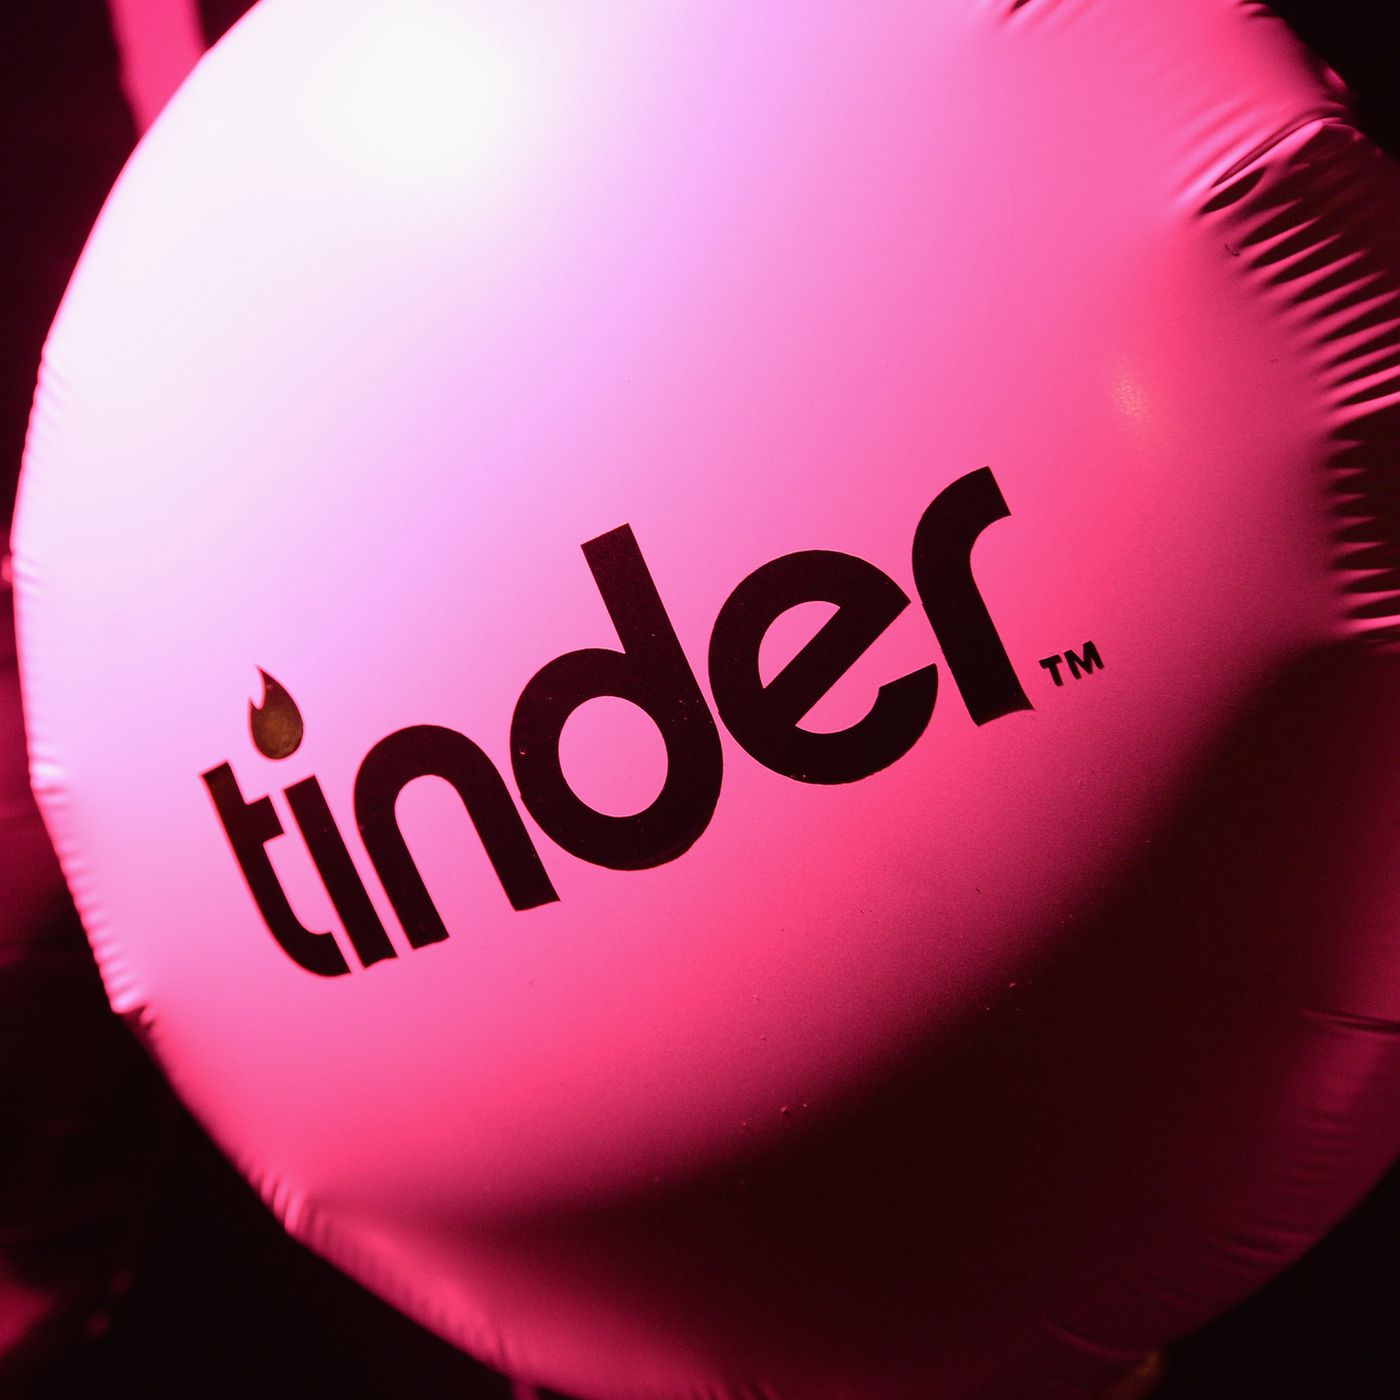 Is tinder safe dating verification real?